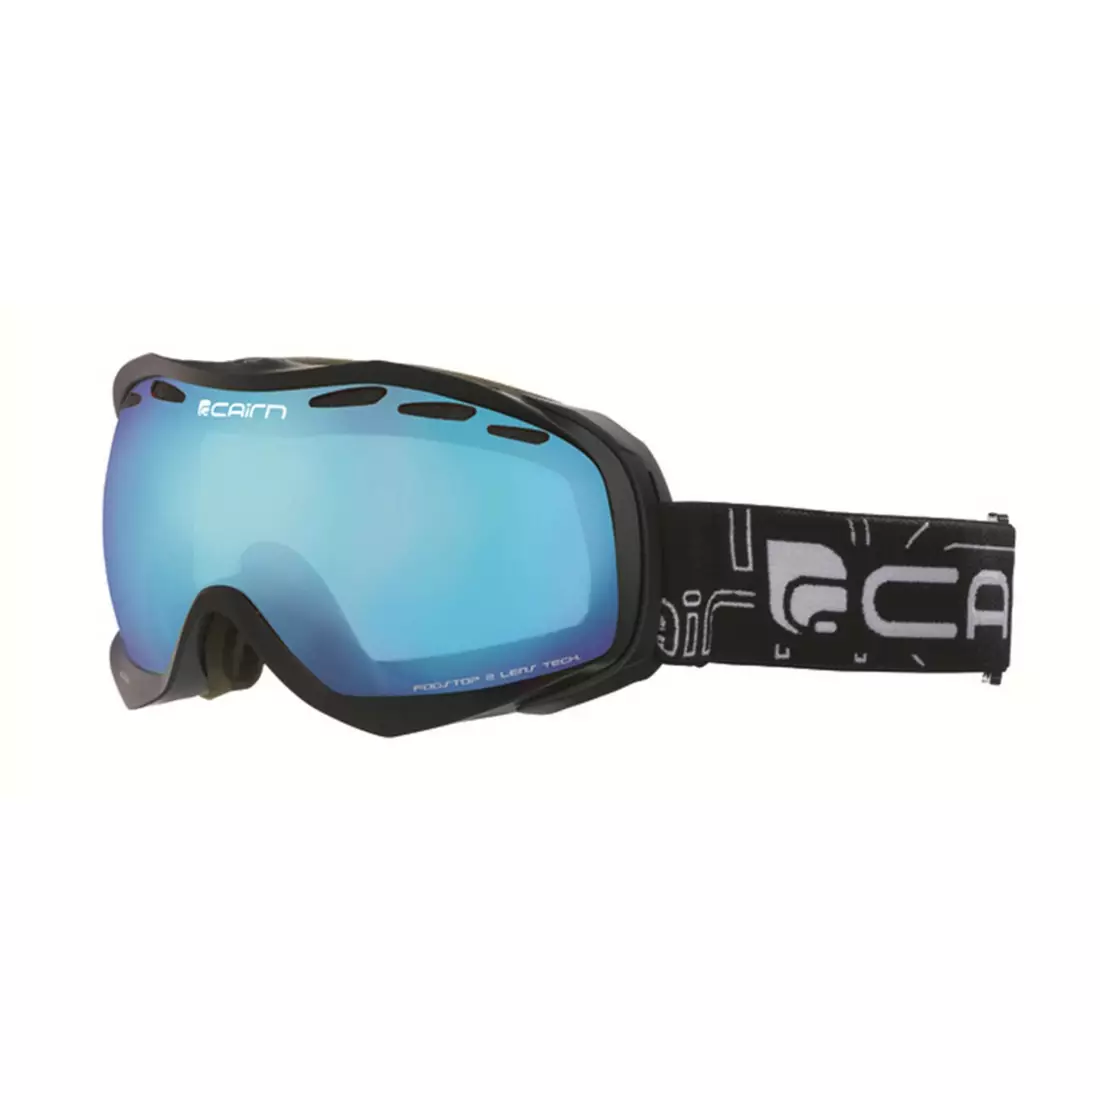 CAIRN lyžařské/snowboardové brýle ALPHA SPX3000 8202, black/blue 5808518202